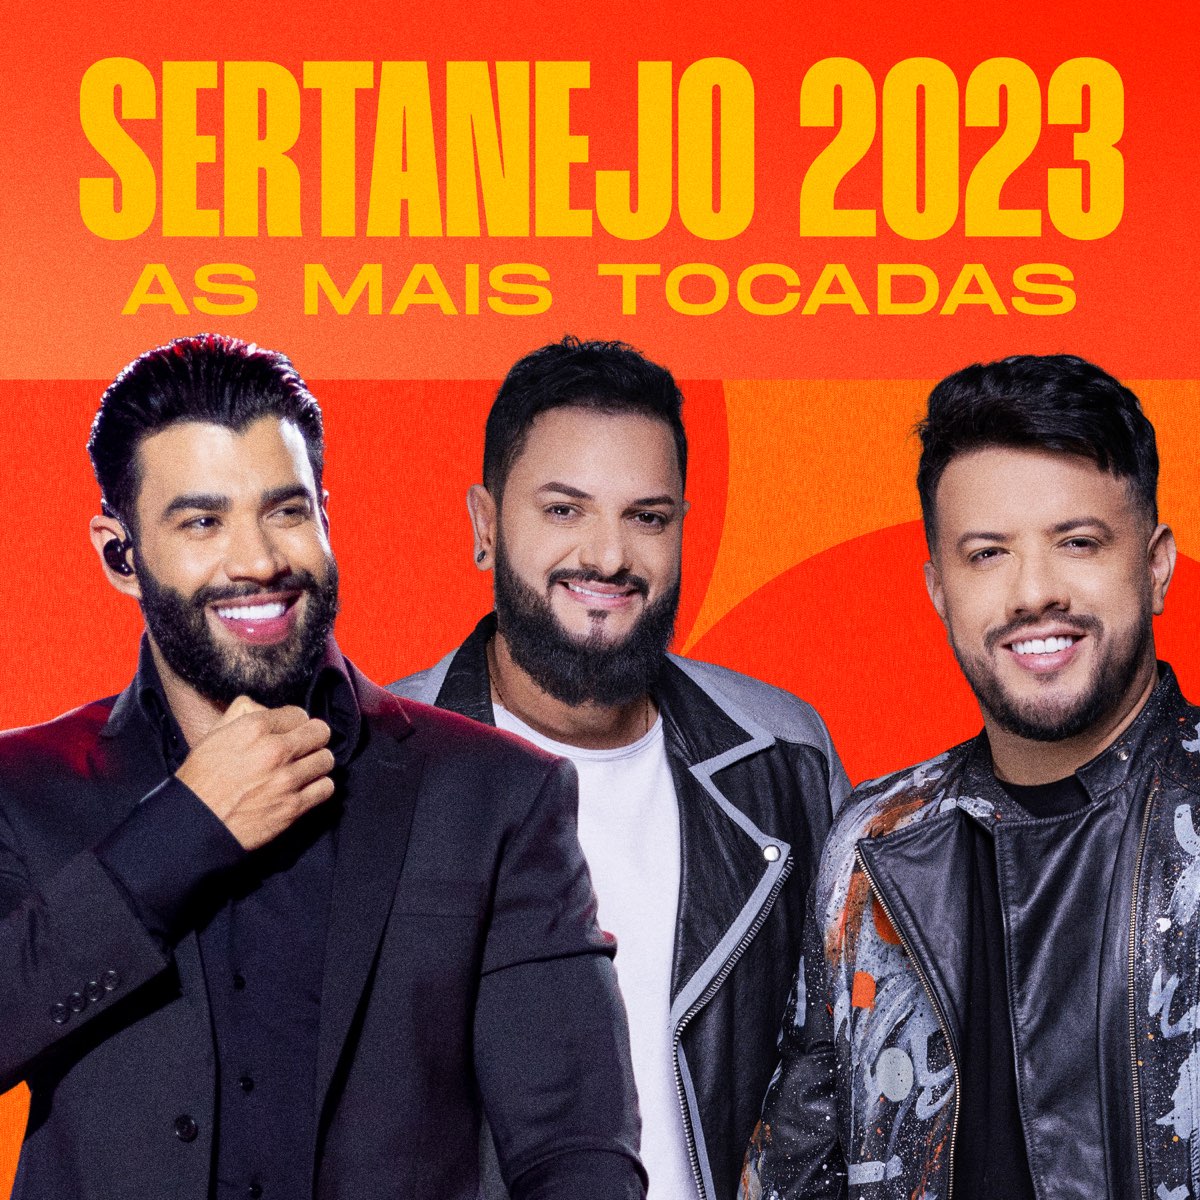 ‎Sertanejo 2023 As Mais Tocadas Album by Various Artists Apple Music